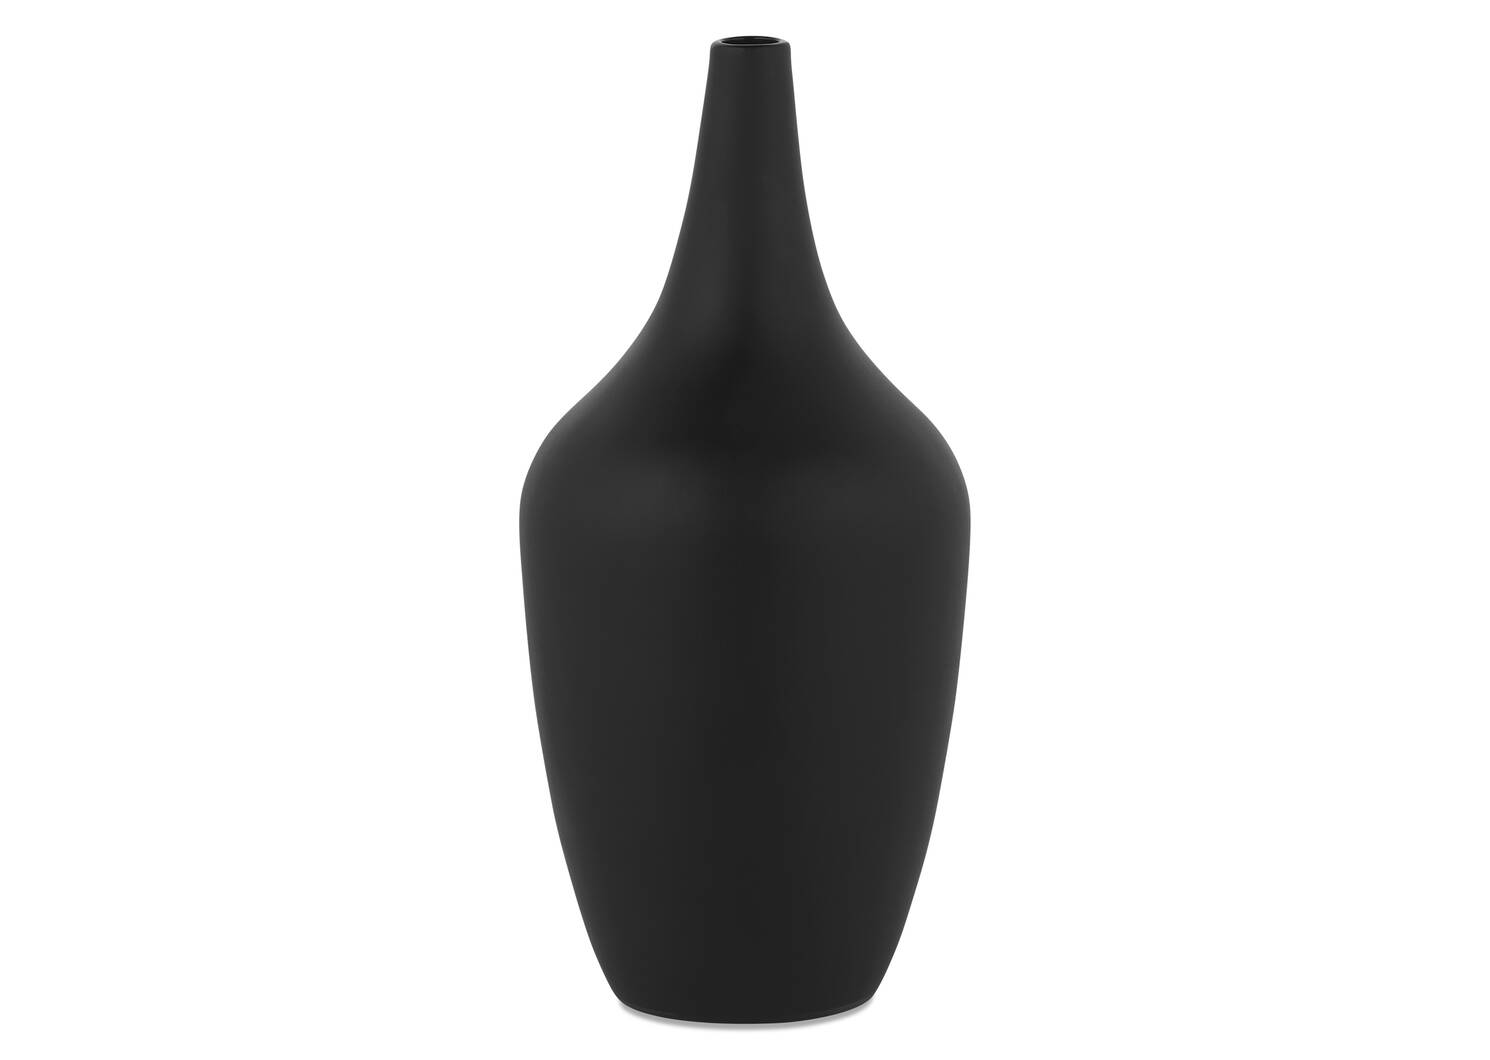 Brixford Vases Black